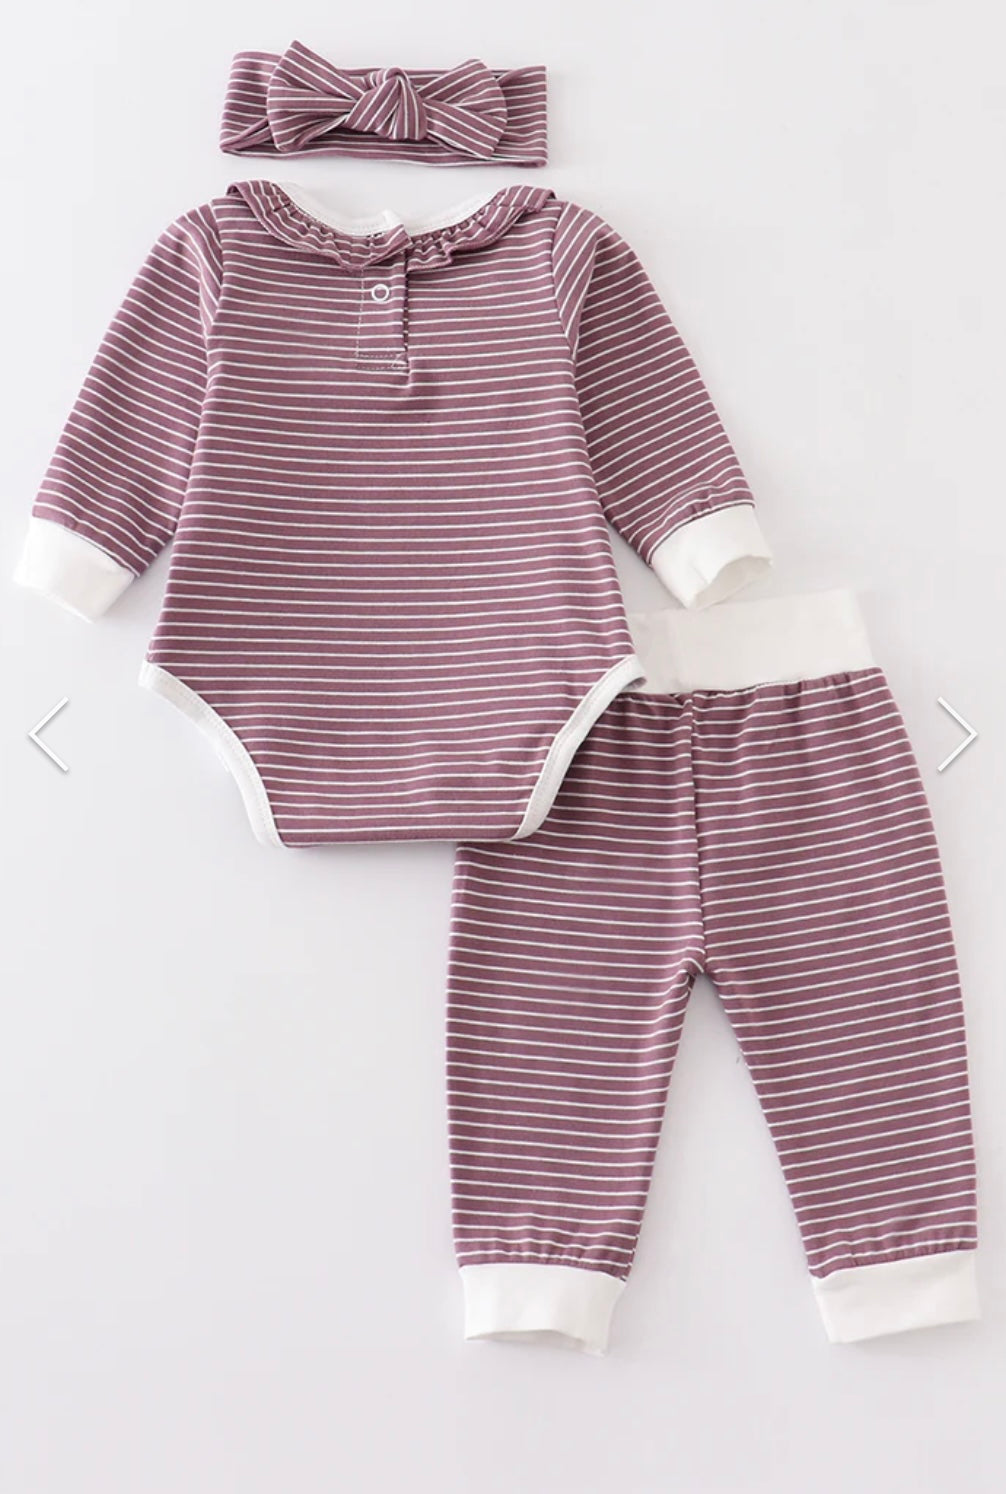 Baby Purple Stripe 3-Pc Set